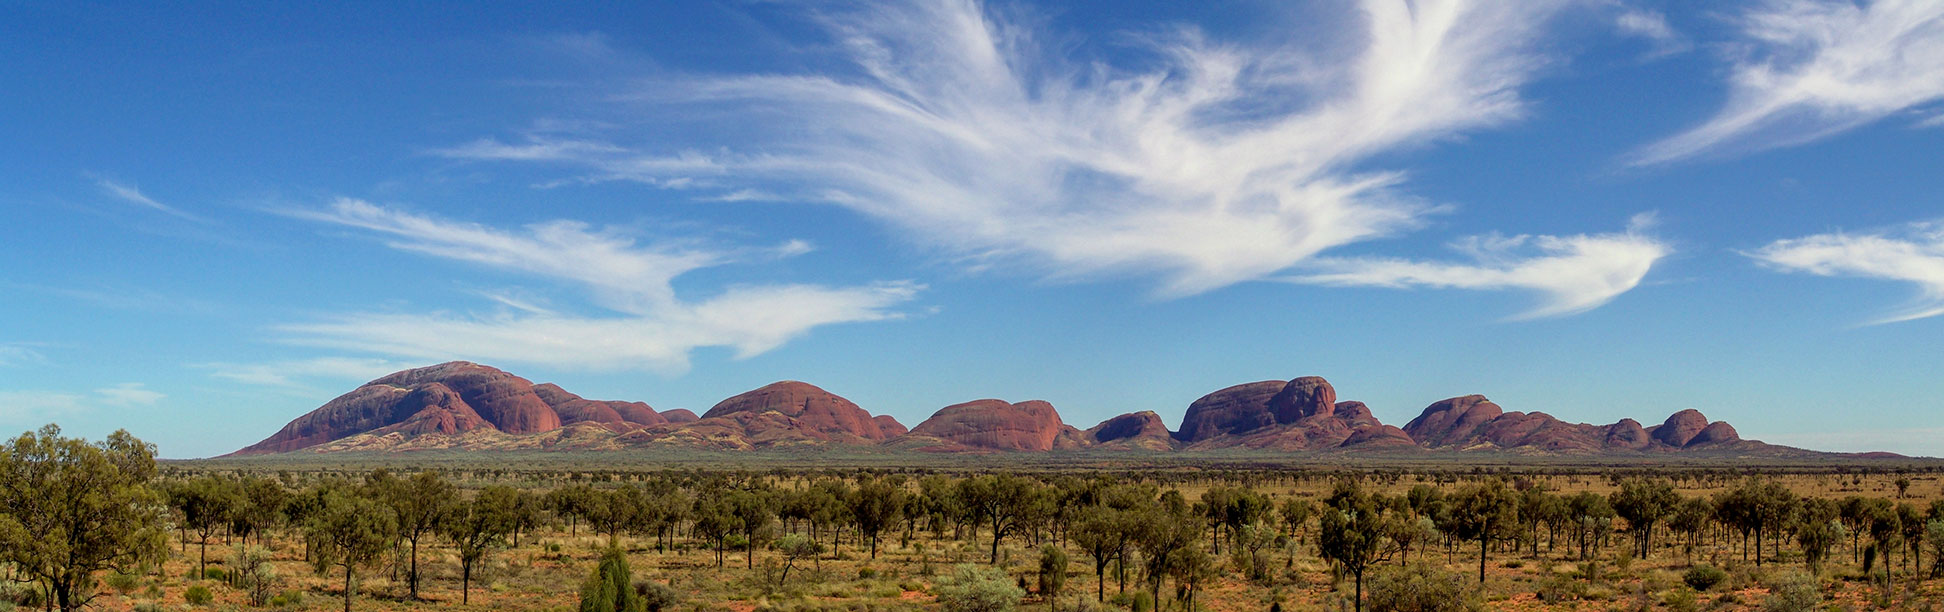 Kata Tjuta or the Olgas is a rock formation near Uluru/Ayers Rock, Australia